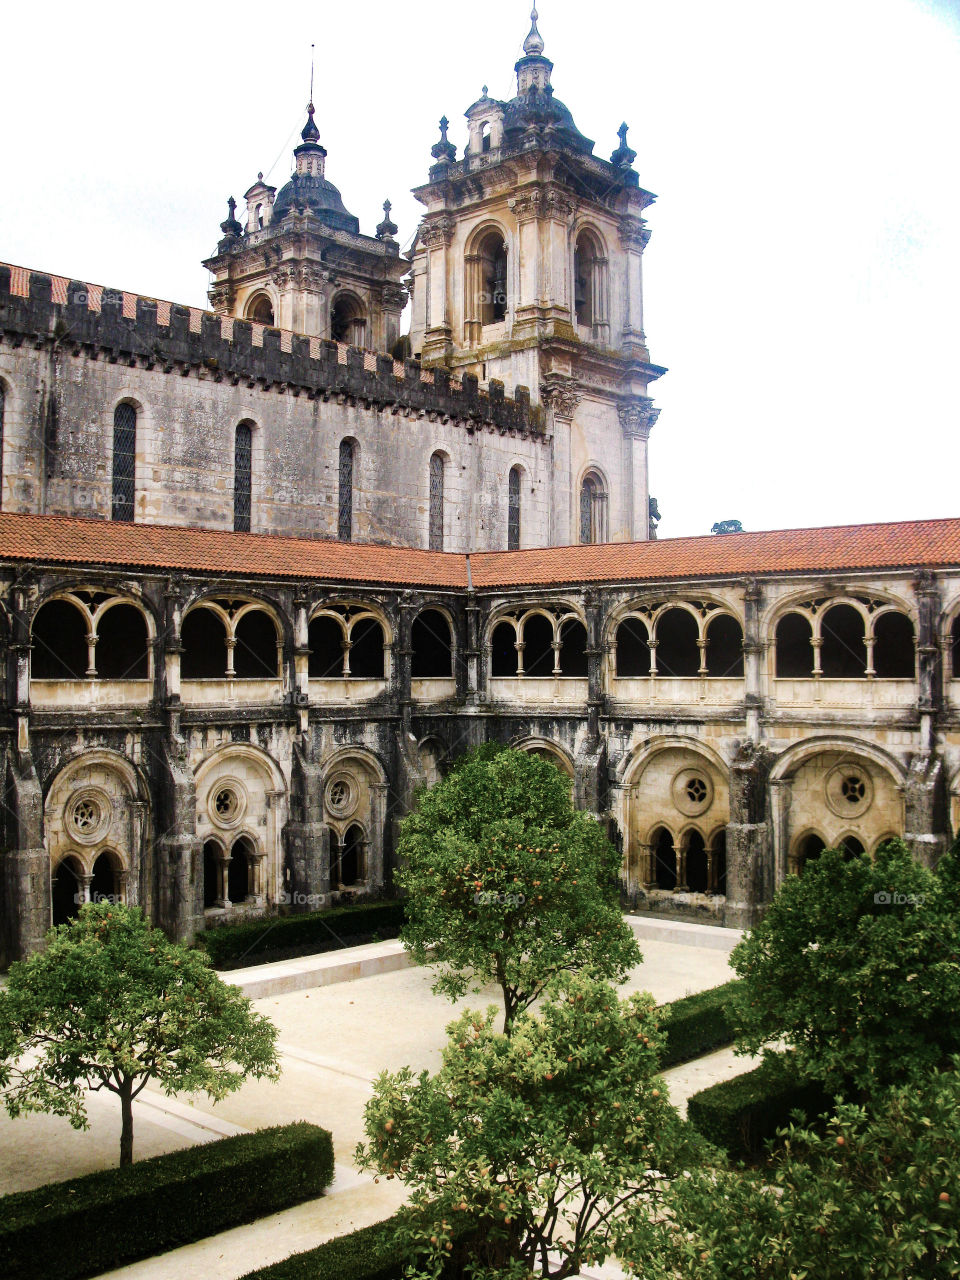 Monastery in Alcobaca in Portugal